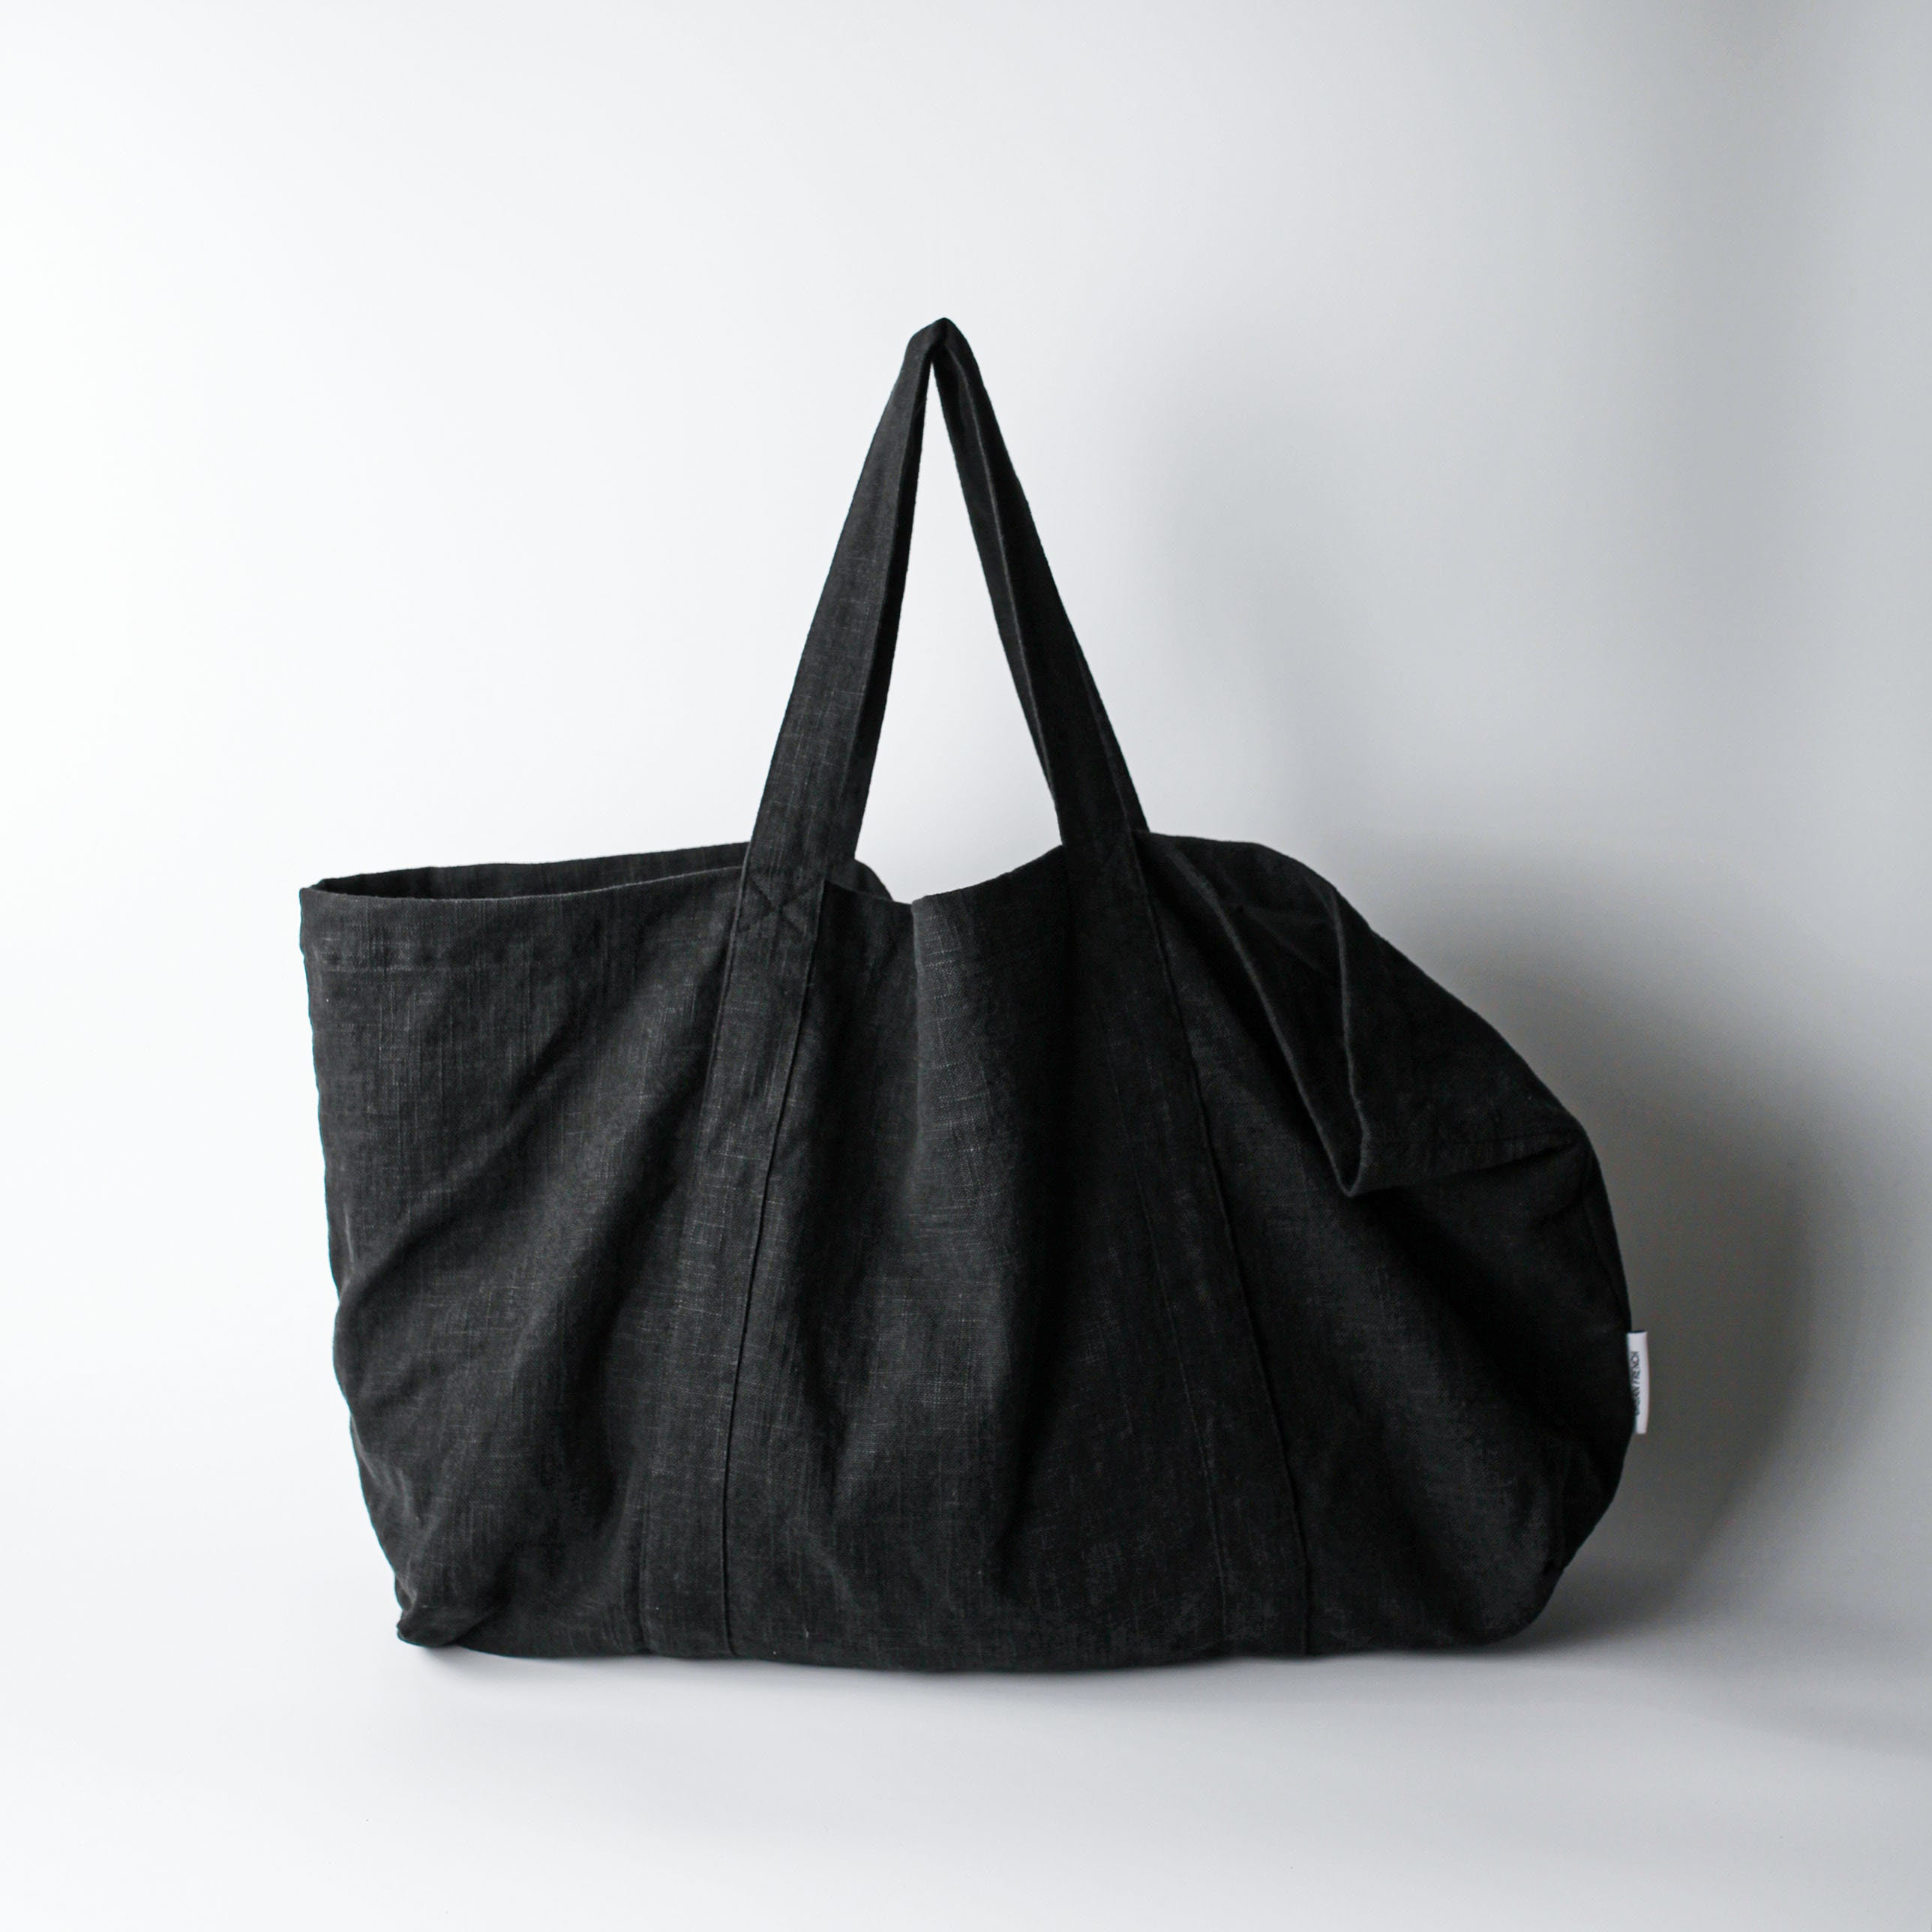 Urban French linen tote bag. Natural linen bag. Natural | Etsy